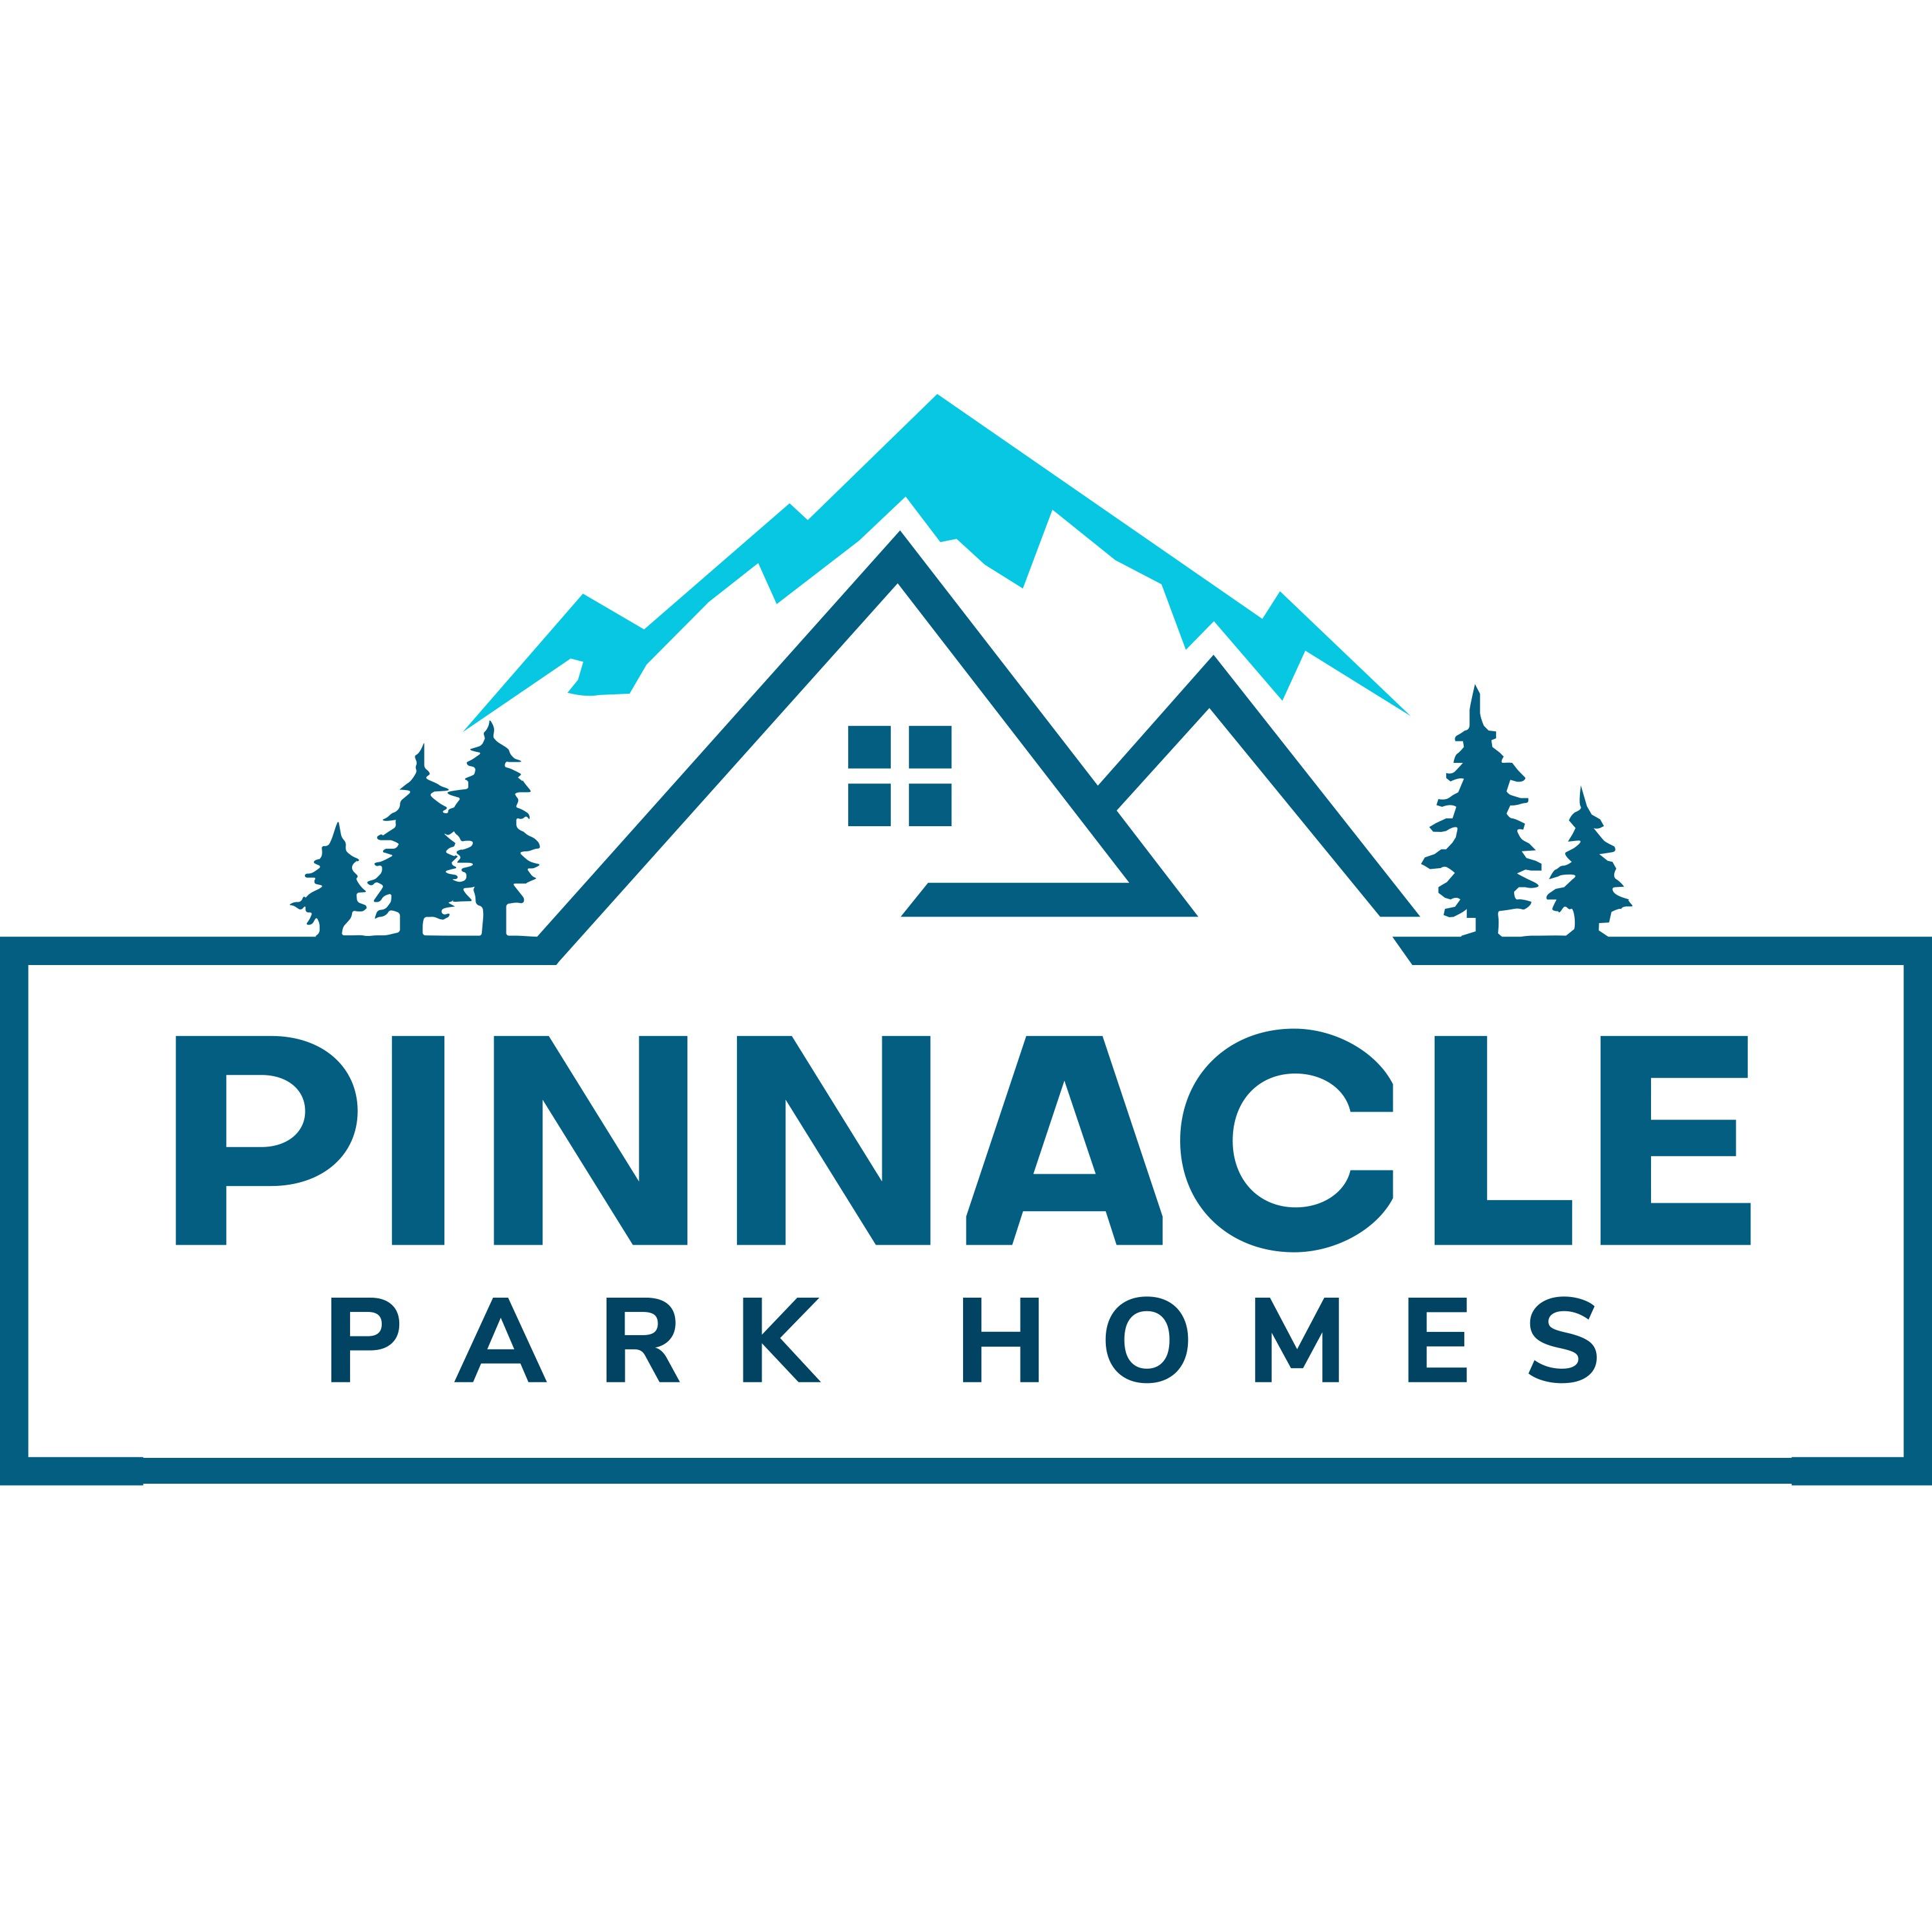 Pinnacle Park Homes